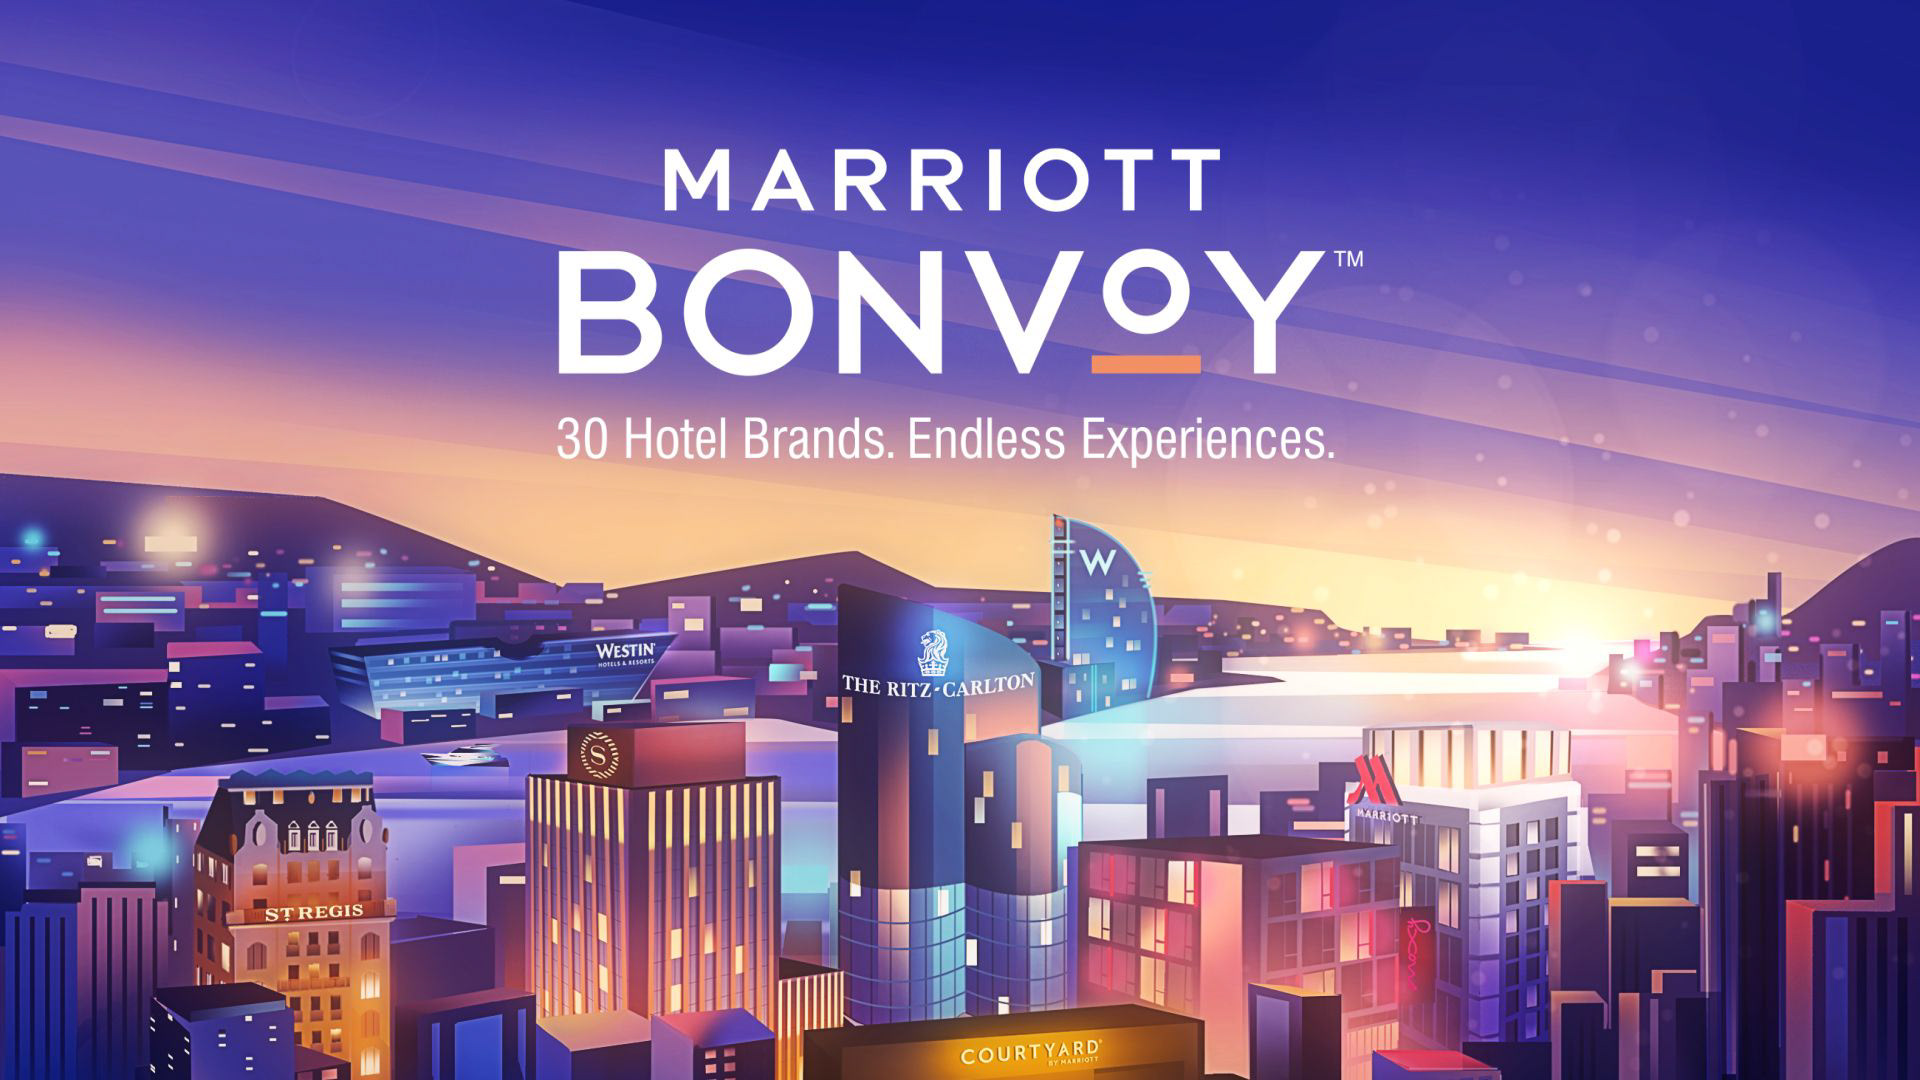 Marriott bonvoy